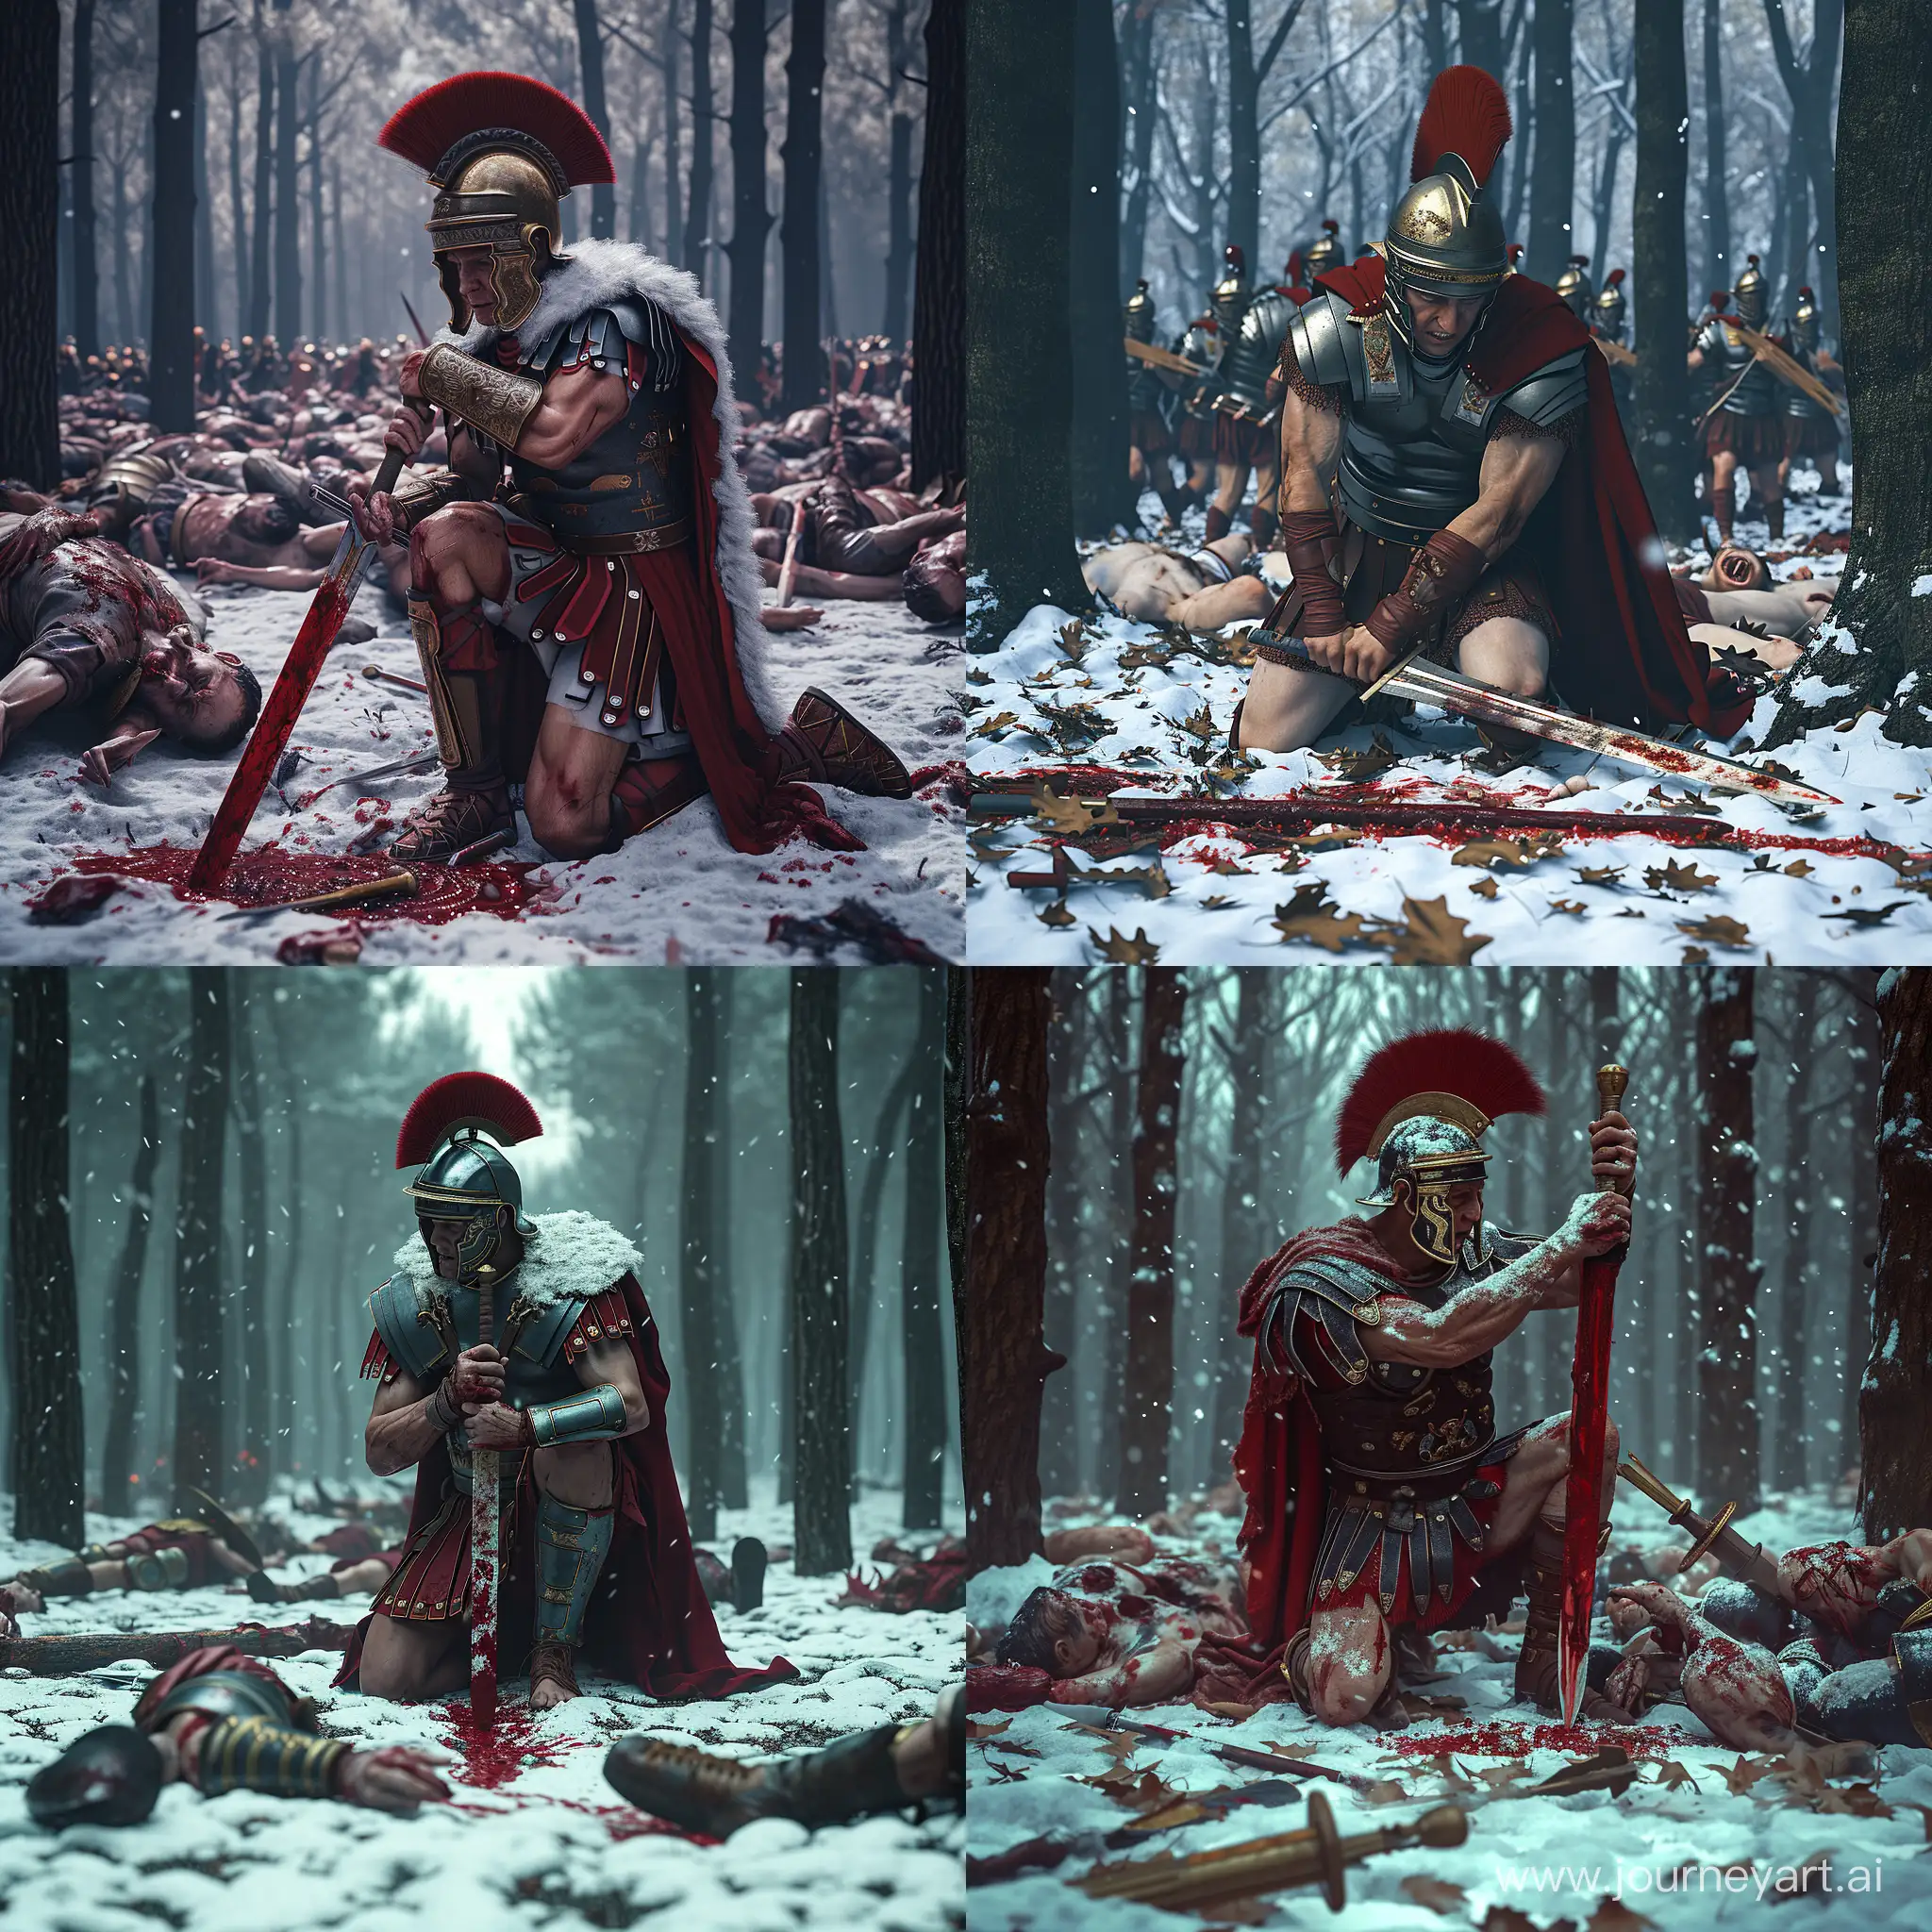 Roman-Legionary-in-Snowy-Forest-Sole-Survivor-Amid-Fallen-Comrades